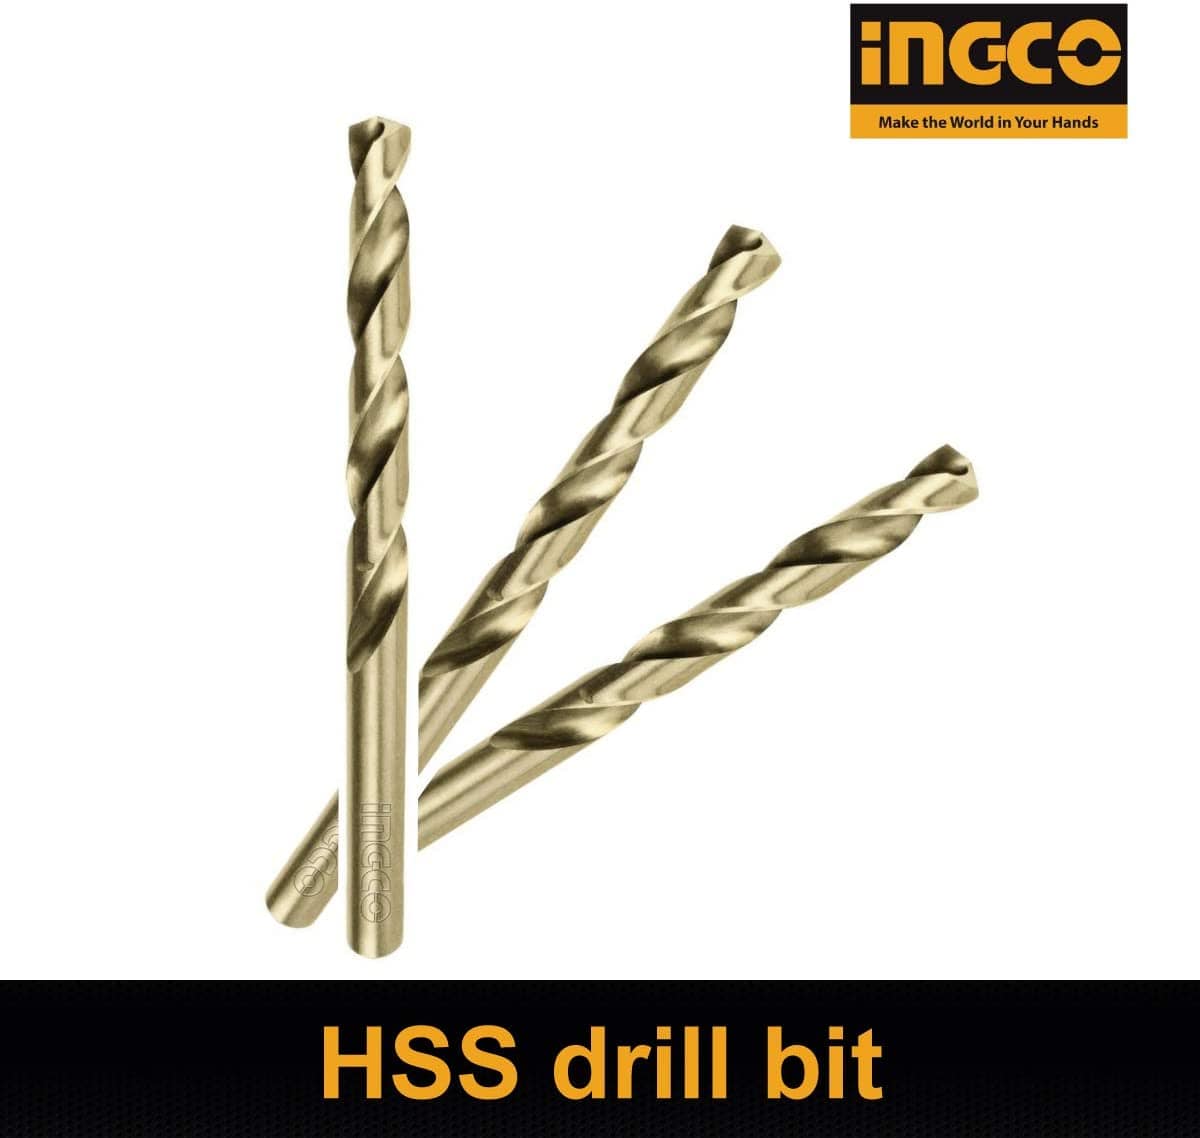 Ingco Metal HSS Drill Bit | Supply Master | Accra, Ghana Tools Building Steel Engineering Hardware tool